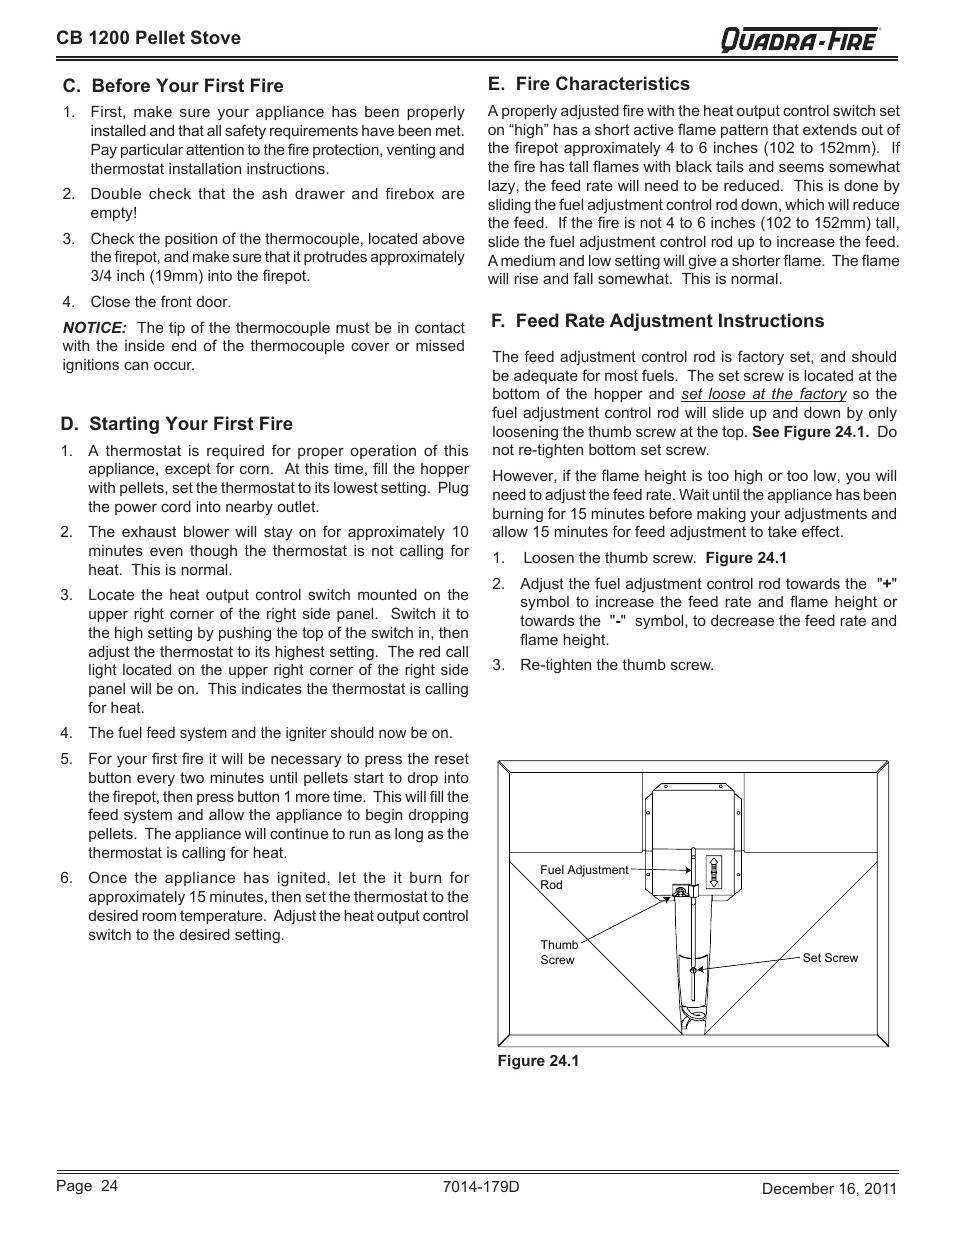 Quadra Fire Cb1200 Manual